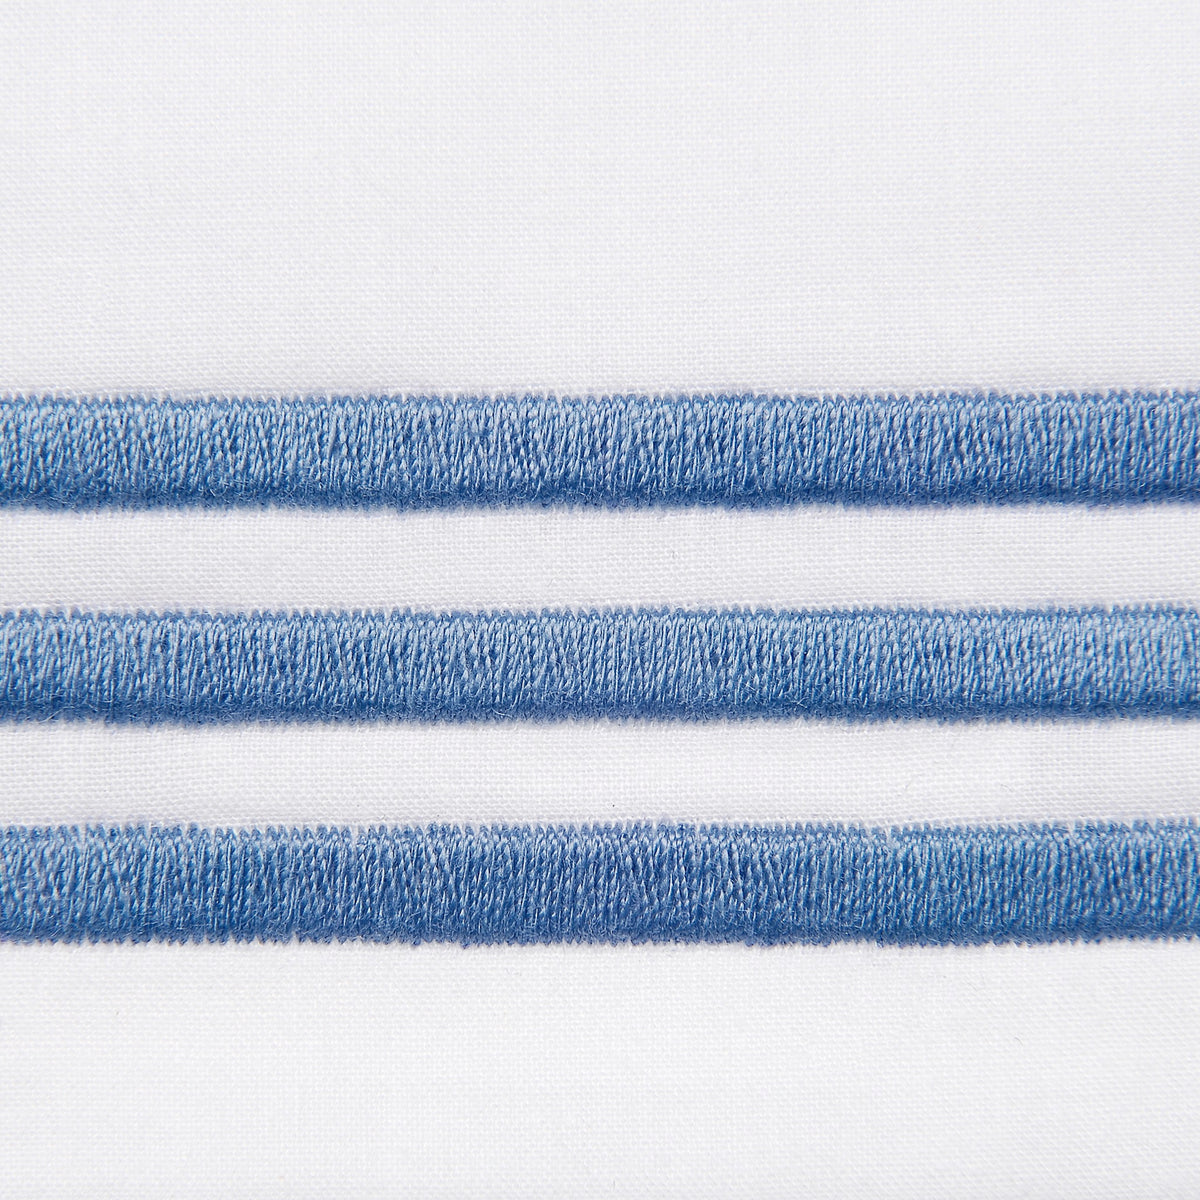 Fabric Closeup of Signoria Platinum Percale Bedding in White/Airforce Blue Color